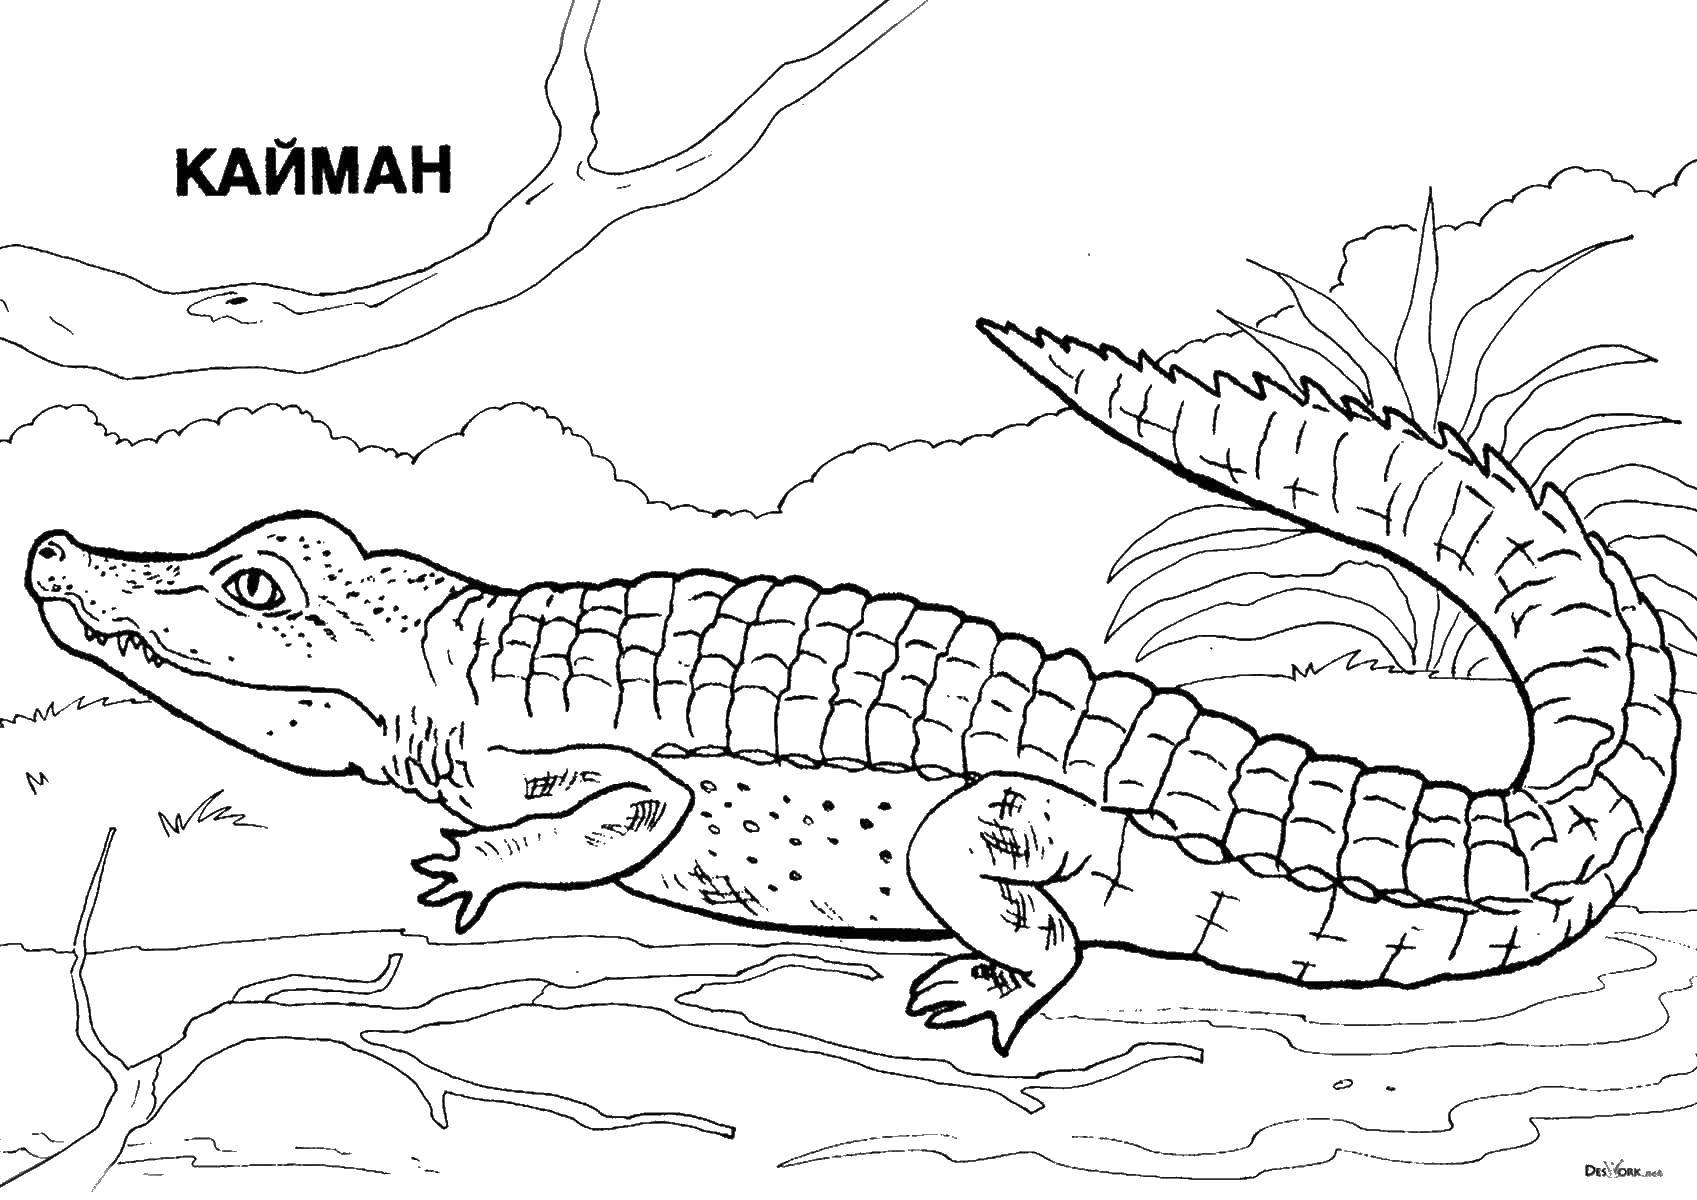 Coloring Caiman. Category Animals. Tags:  animals, crocodile, Caiman.